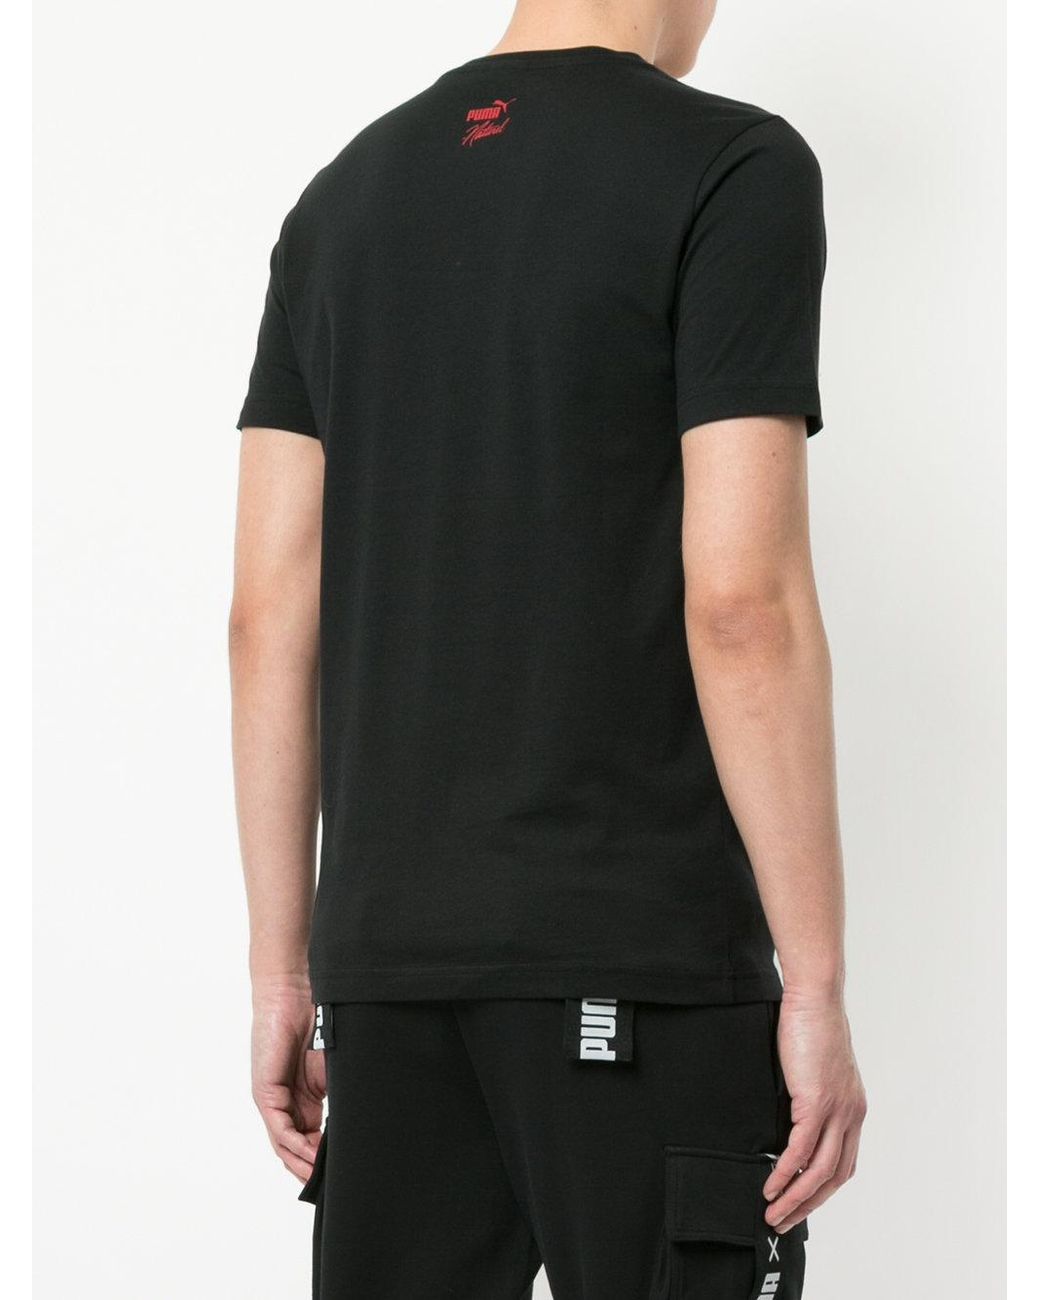 PUMA Cotton Skeleton T-shirt in Black for Men | Lyst